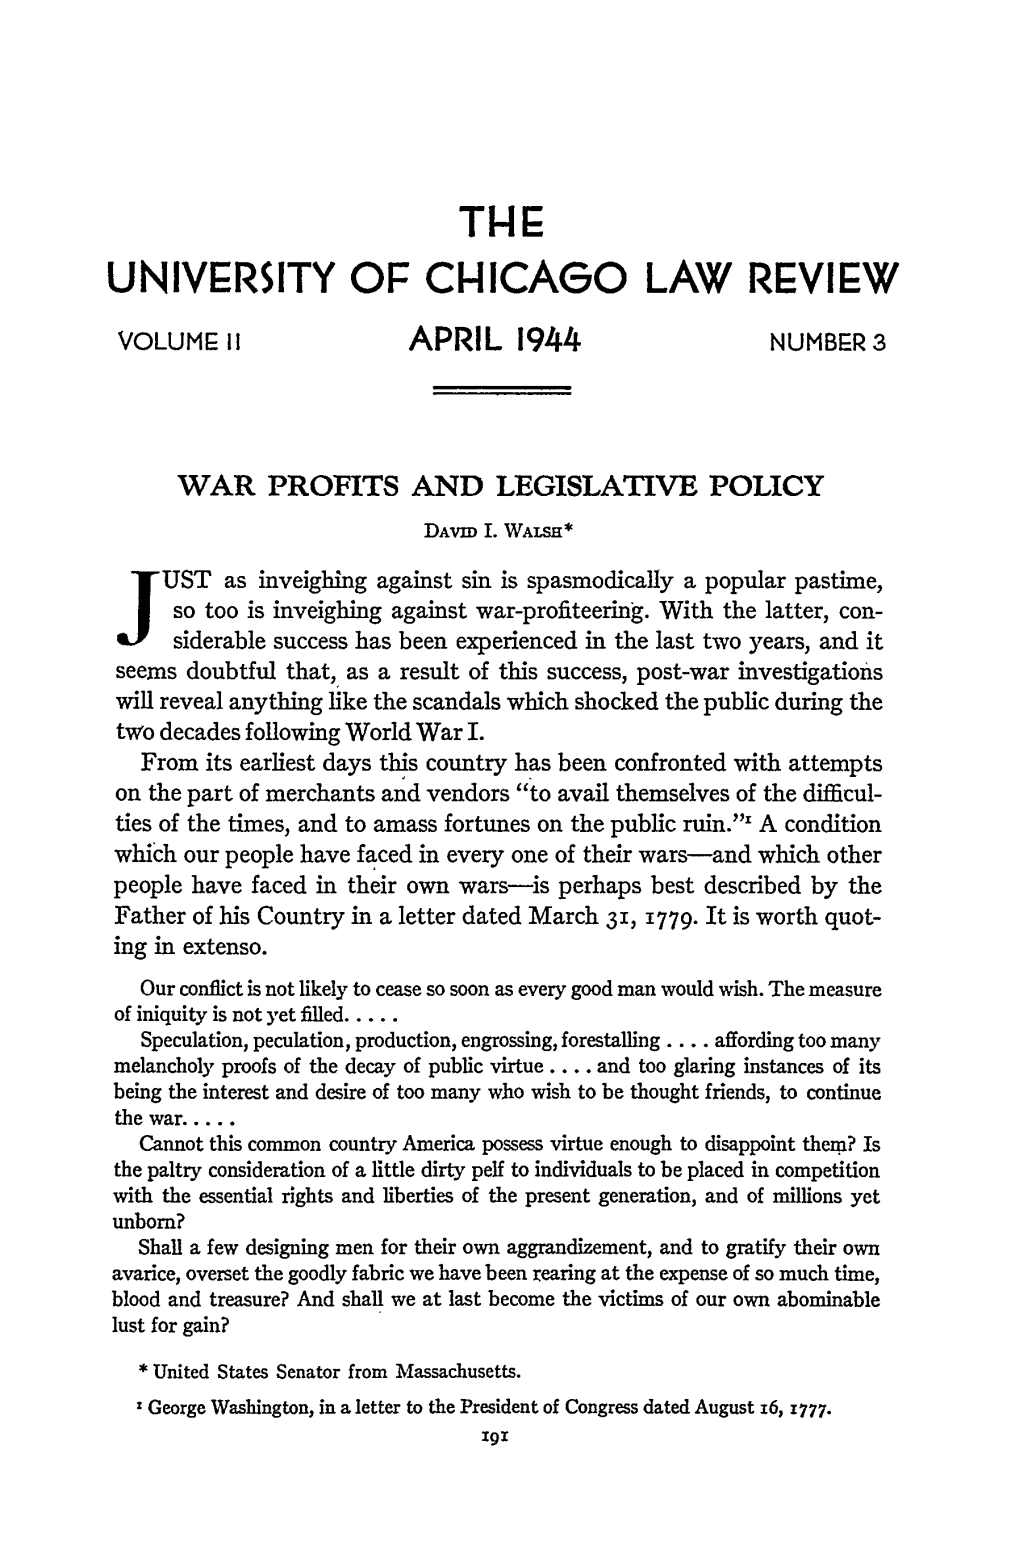 War Profits and Legislative Policy